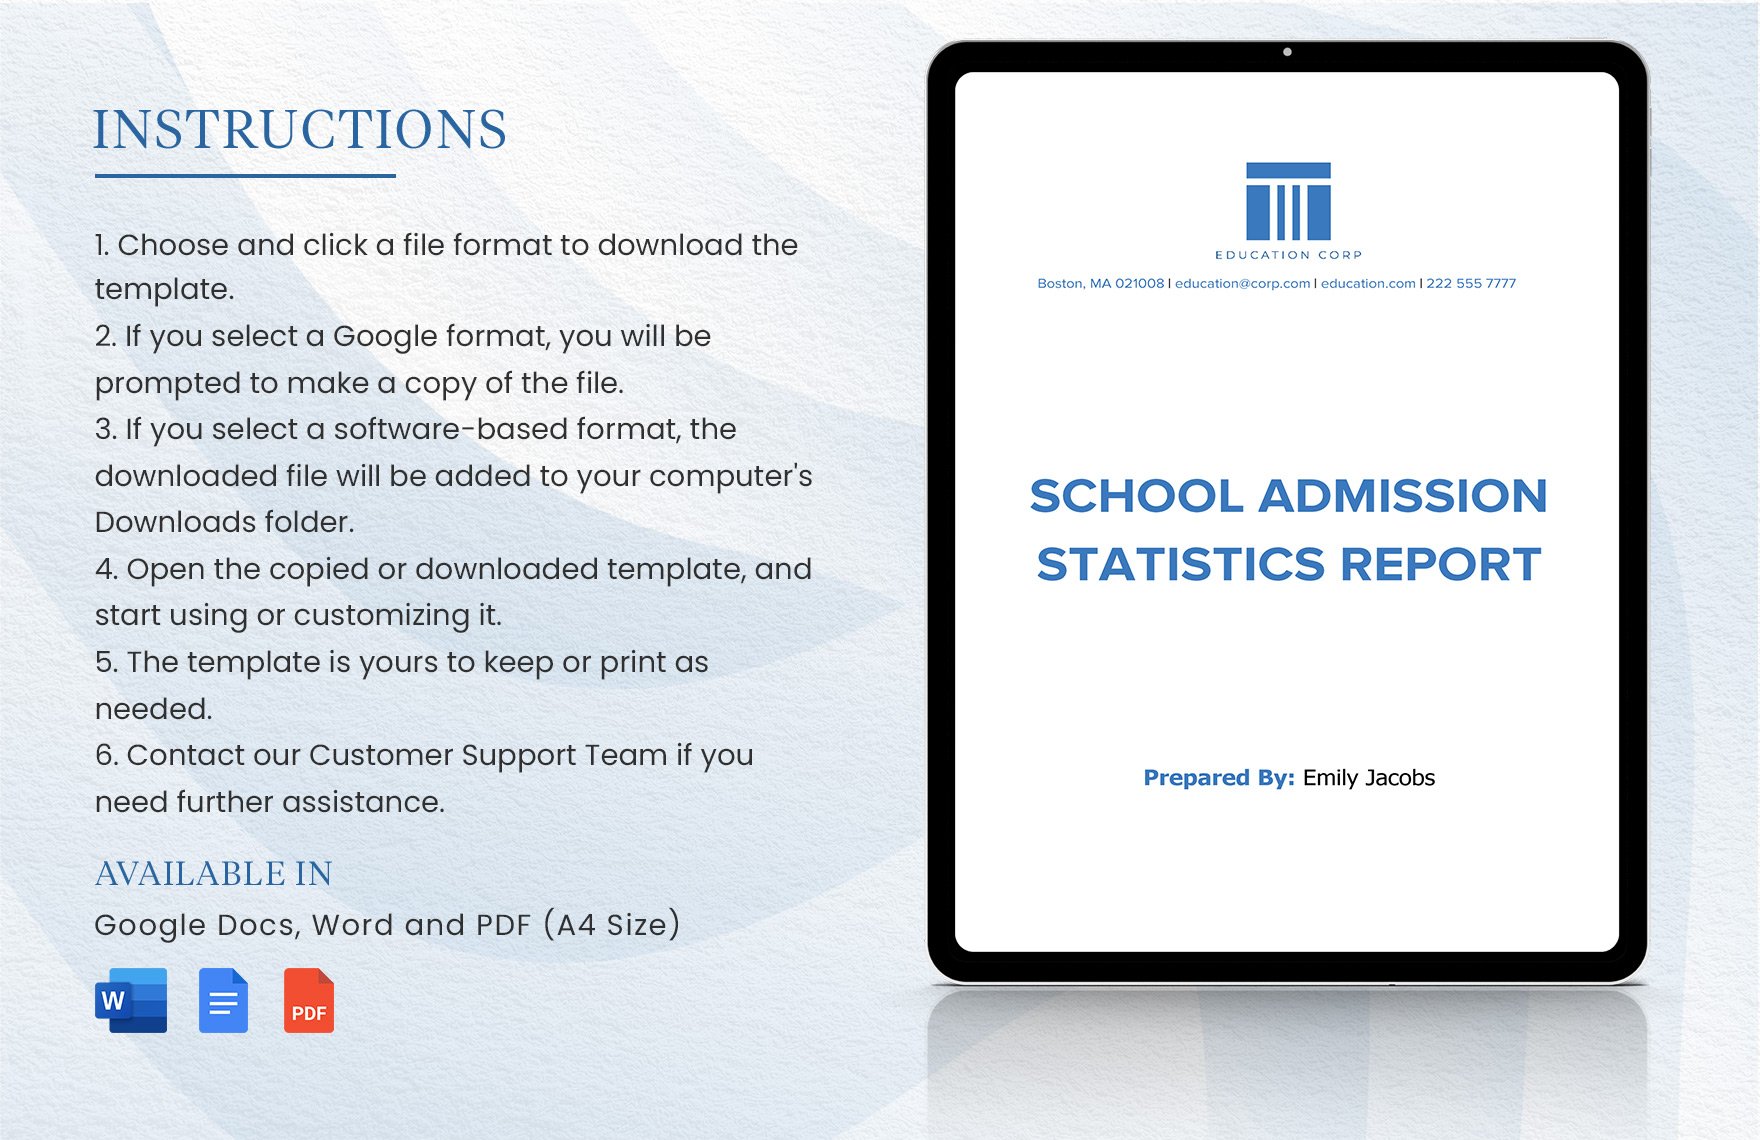 School Admission Statistics Report Template